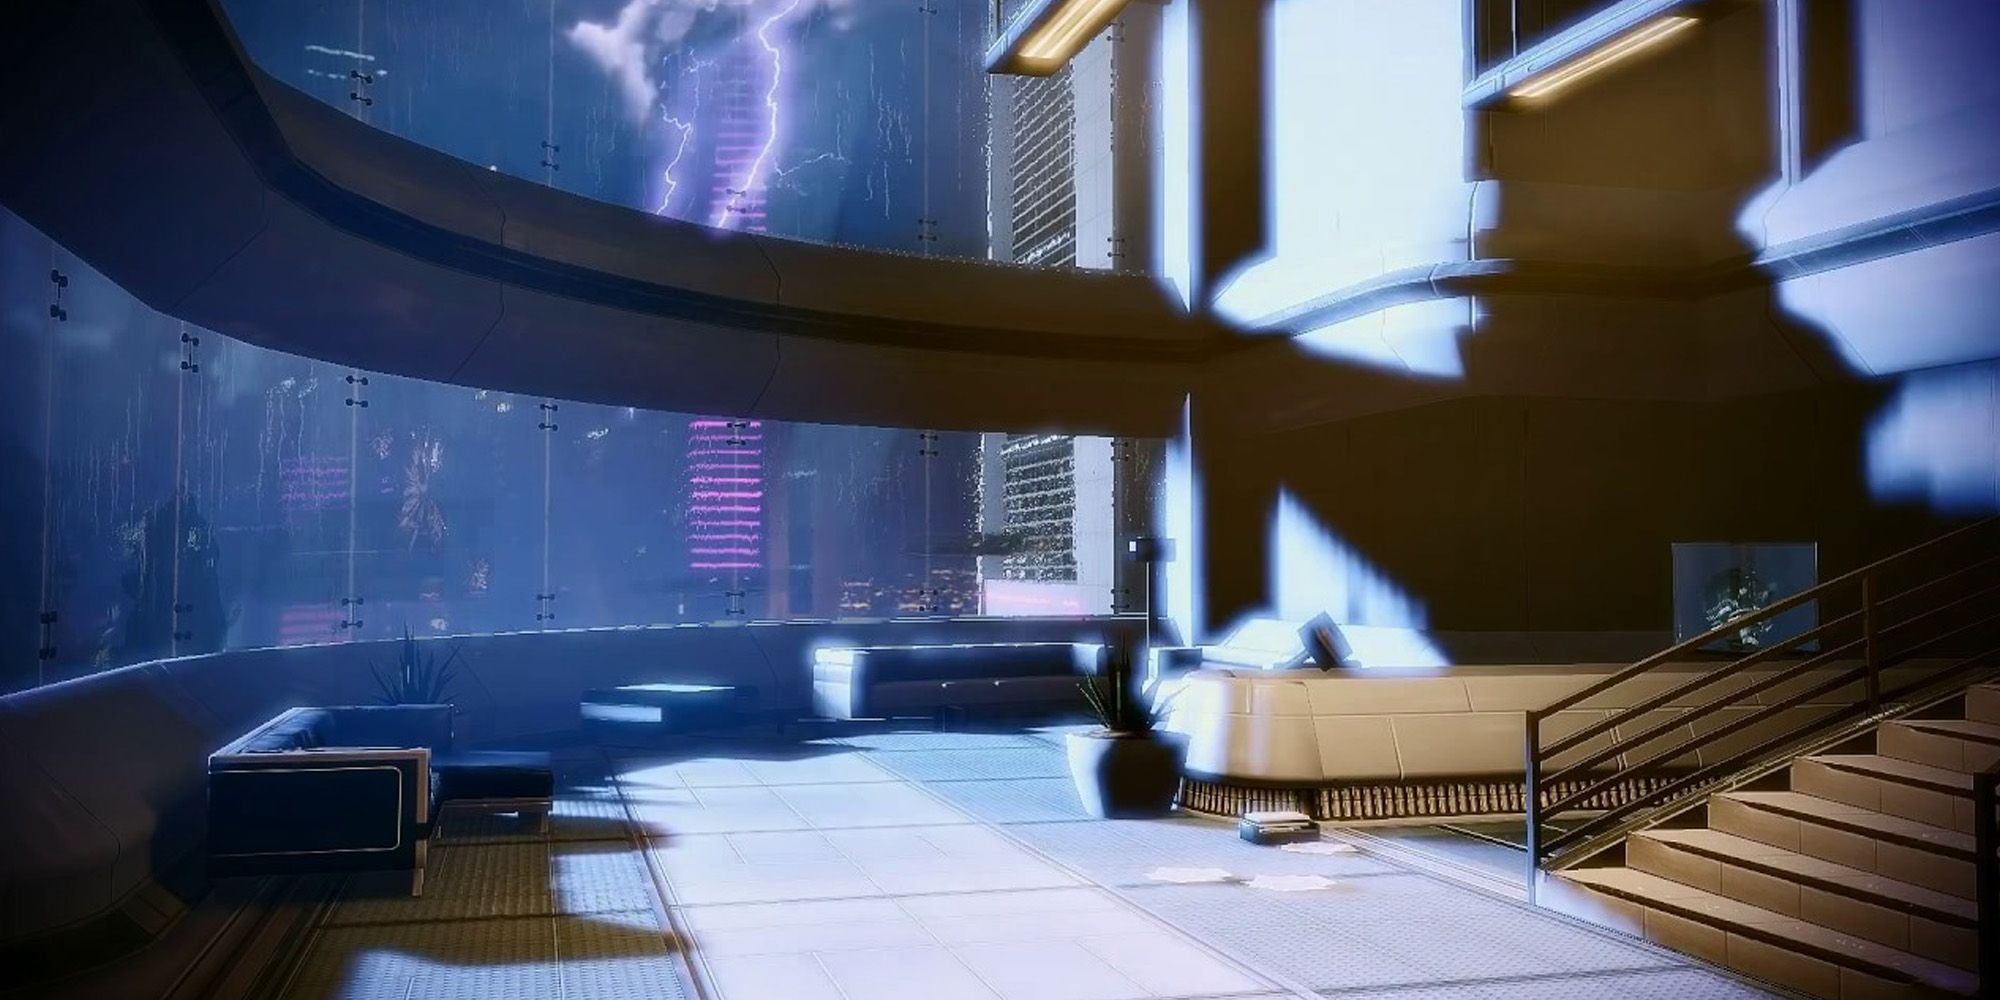 Mass Effect 2 Liara's apartment on Illium